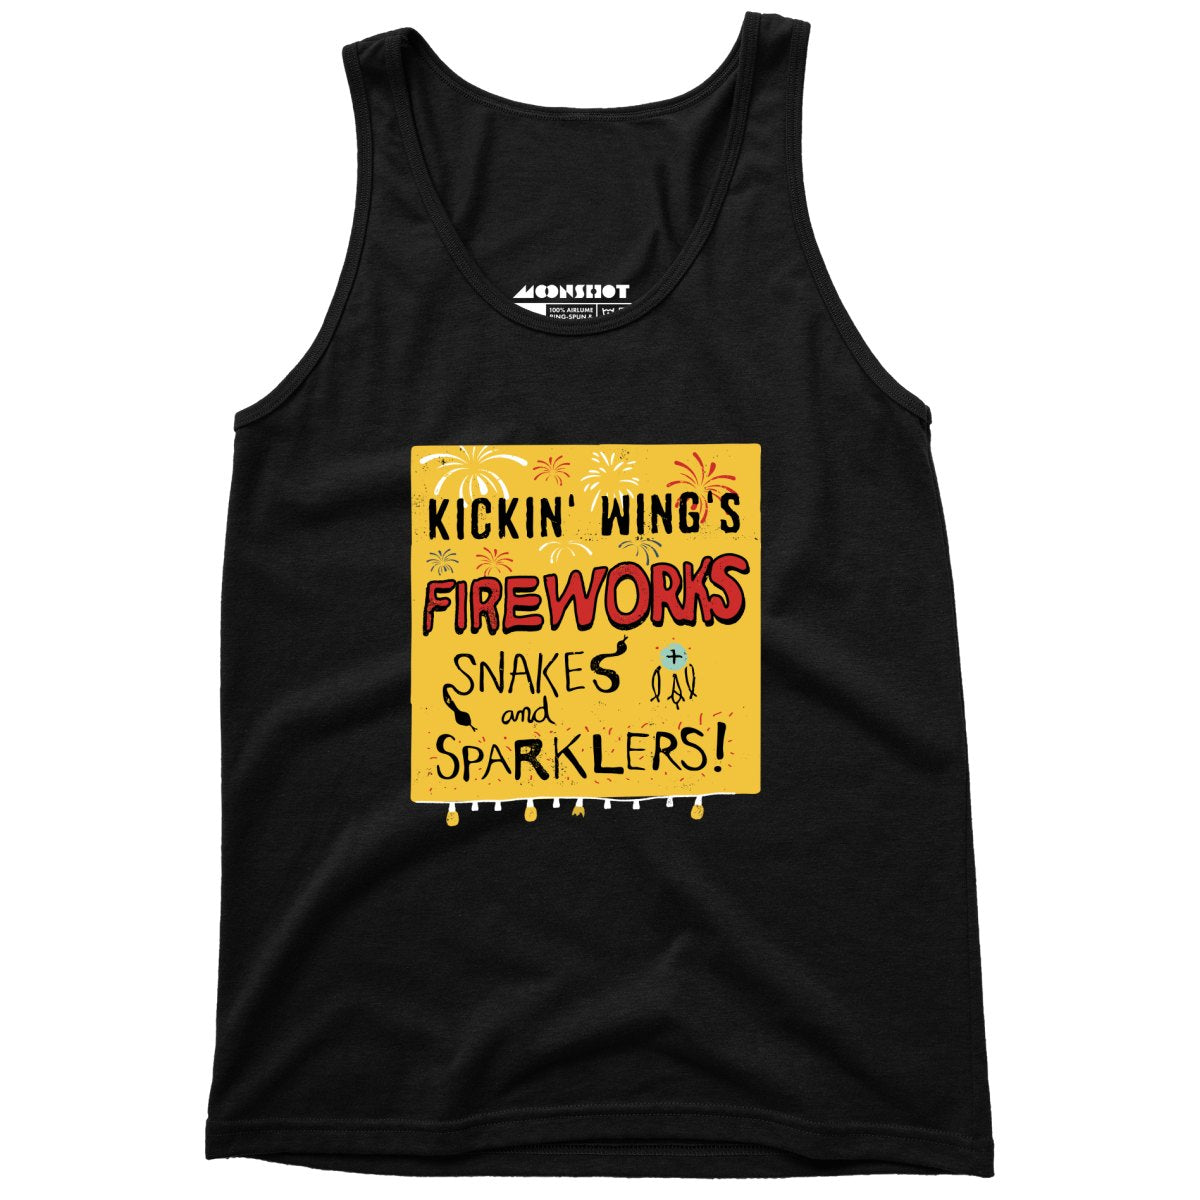 Kickin' Wing's Fireworks Snakes & Sparklers - Unisex Tank Top